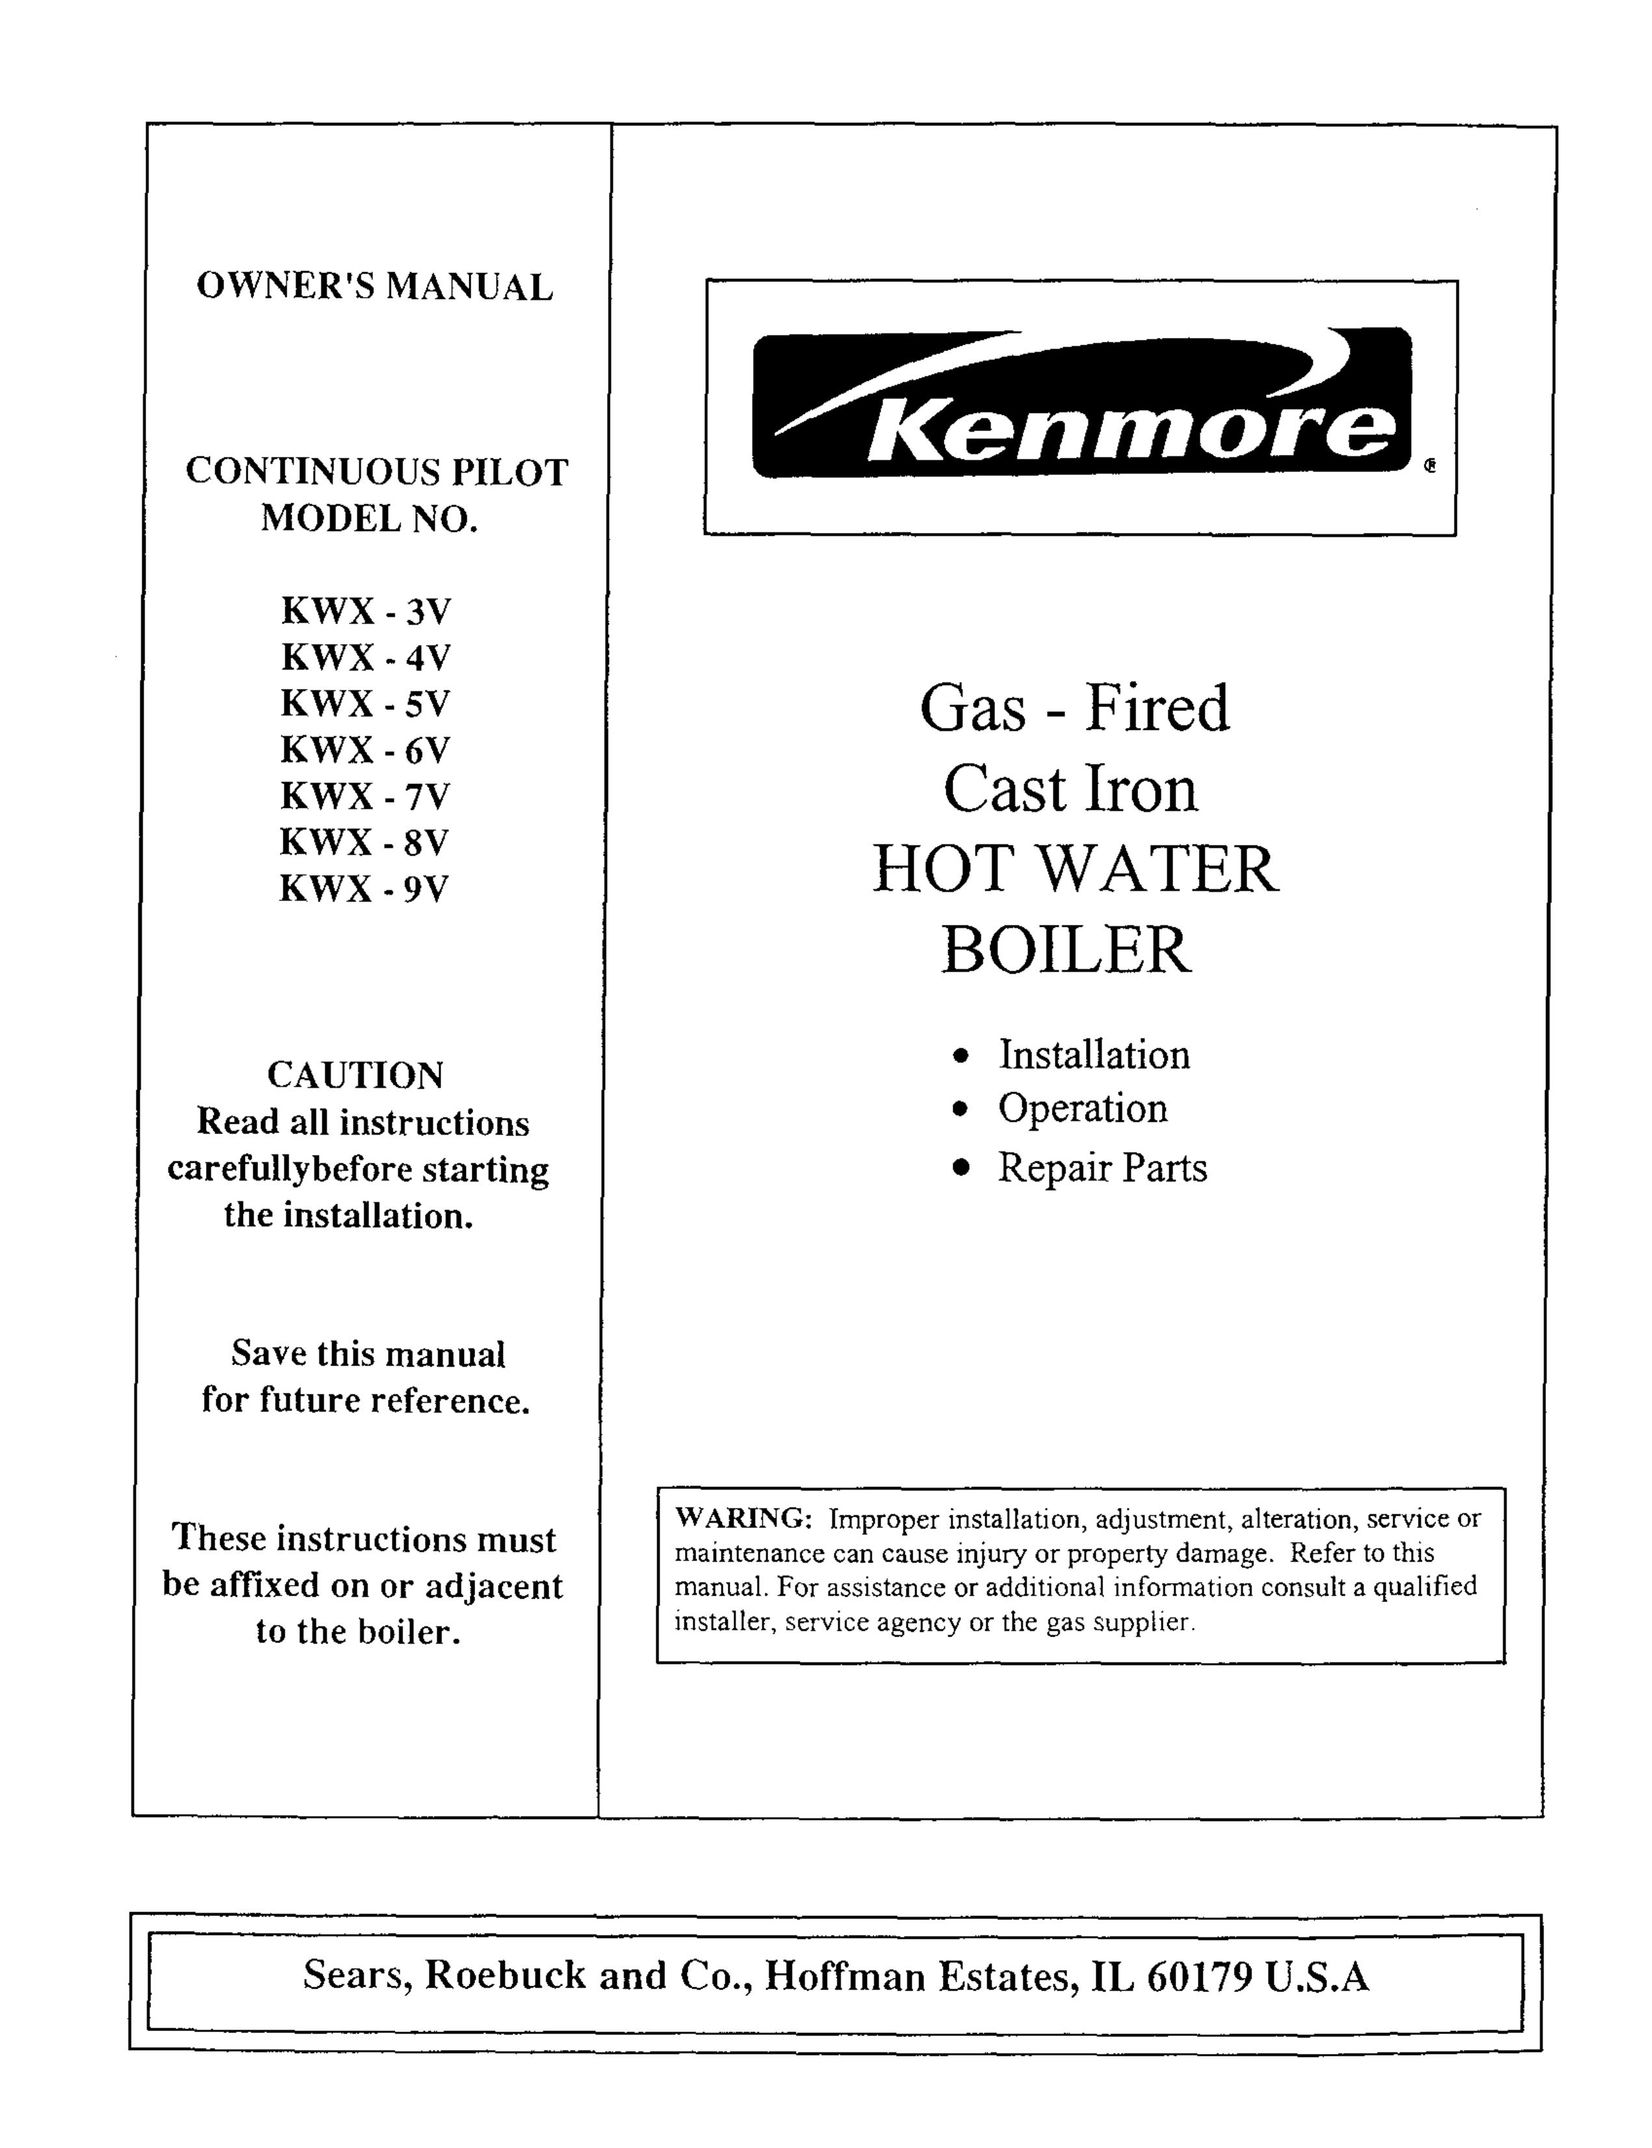 Kenmore KWX - 9V Boiler User Manual